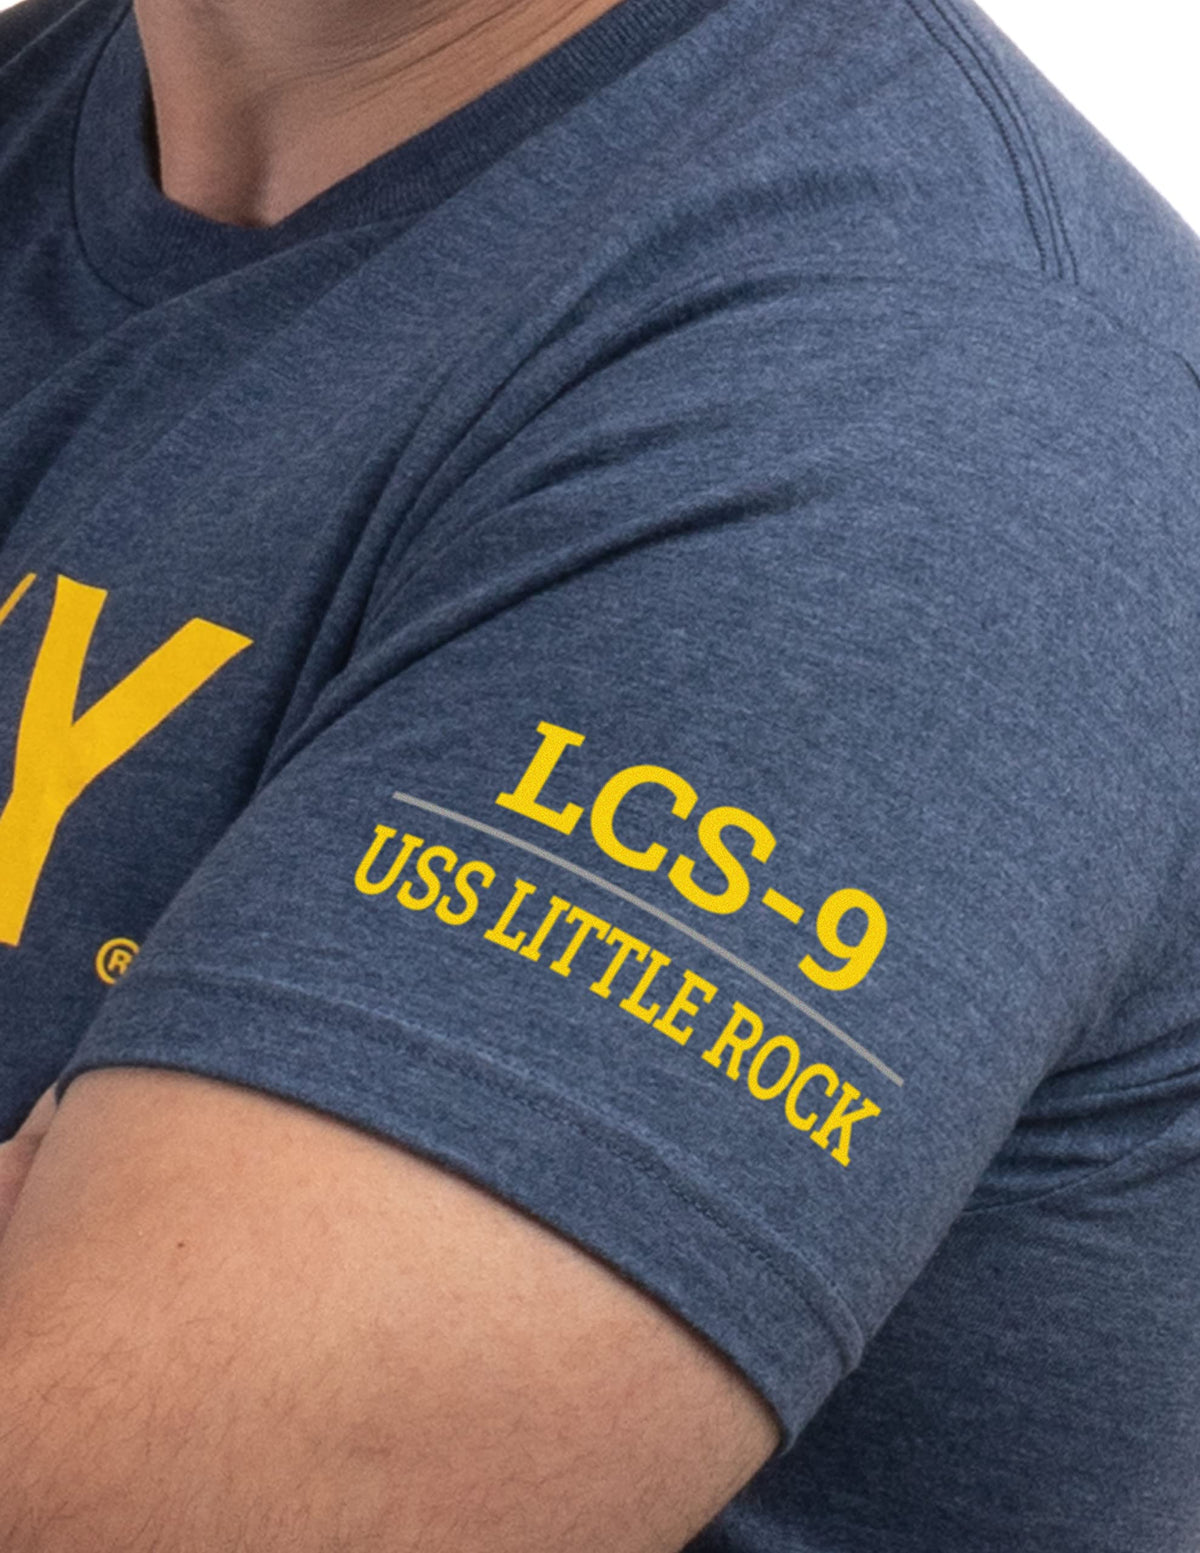 USS Little Rock, LCS-9 | U.S. Navy Sailor Veteran USN United States Naval T-shirt for Men Women